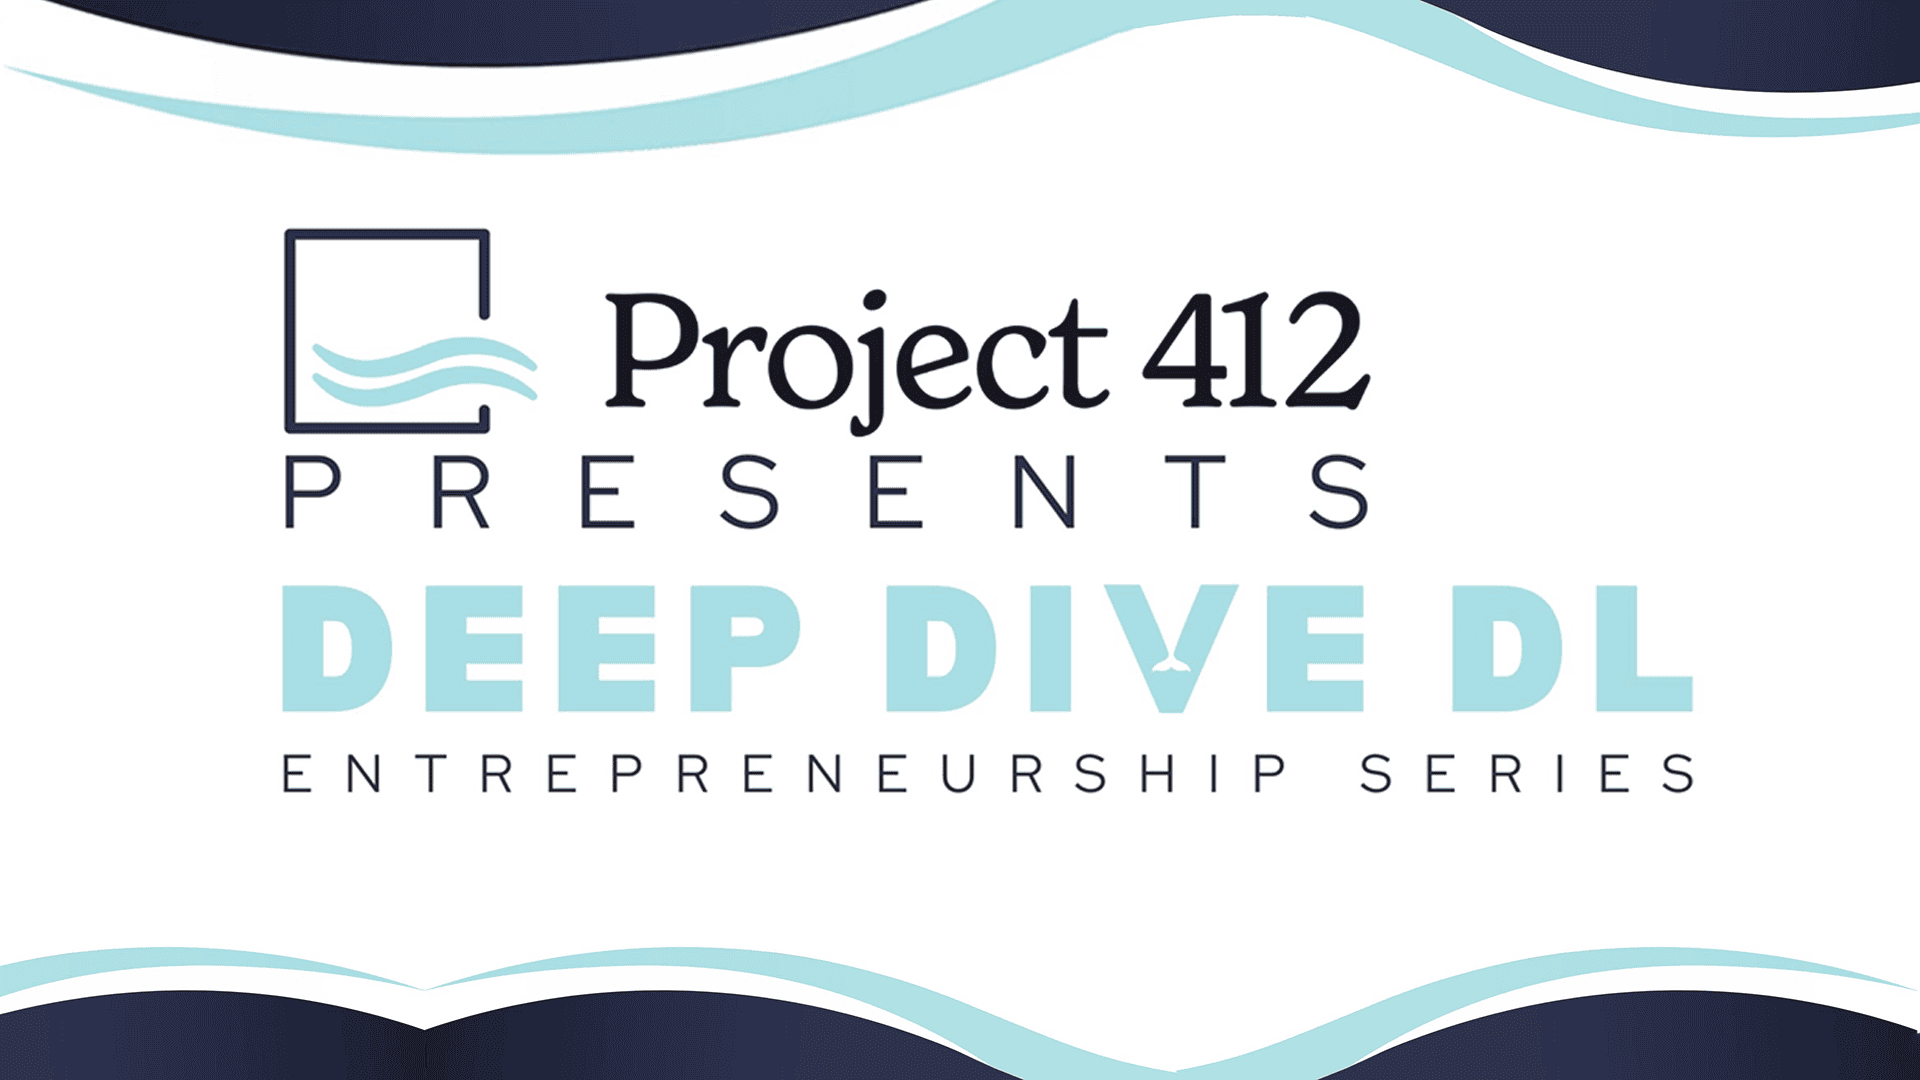 Project 412 presents Deep Dive DL Entrepreneurship Series